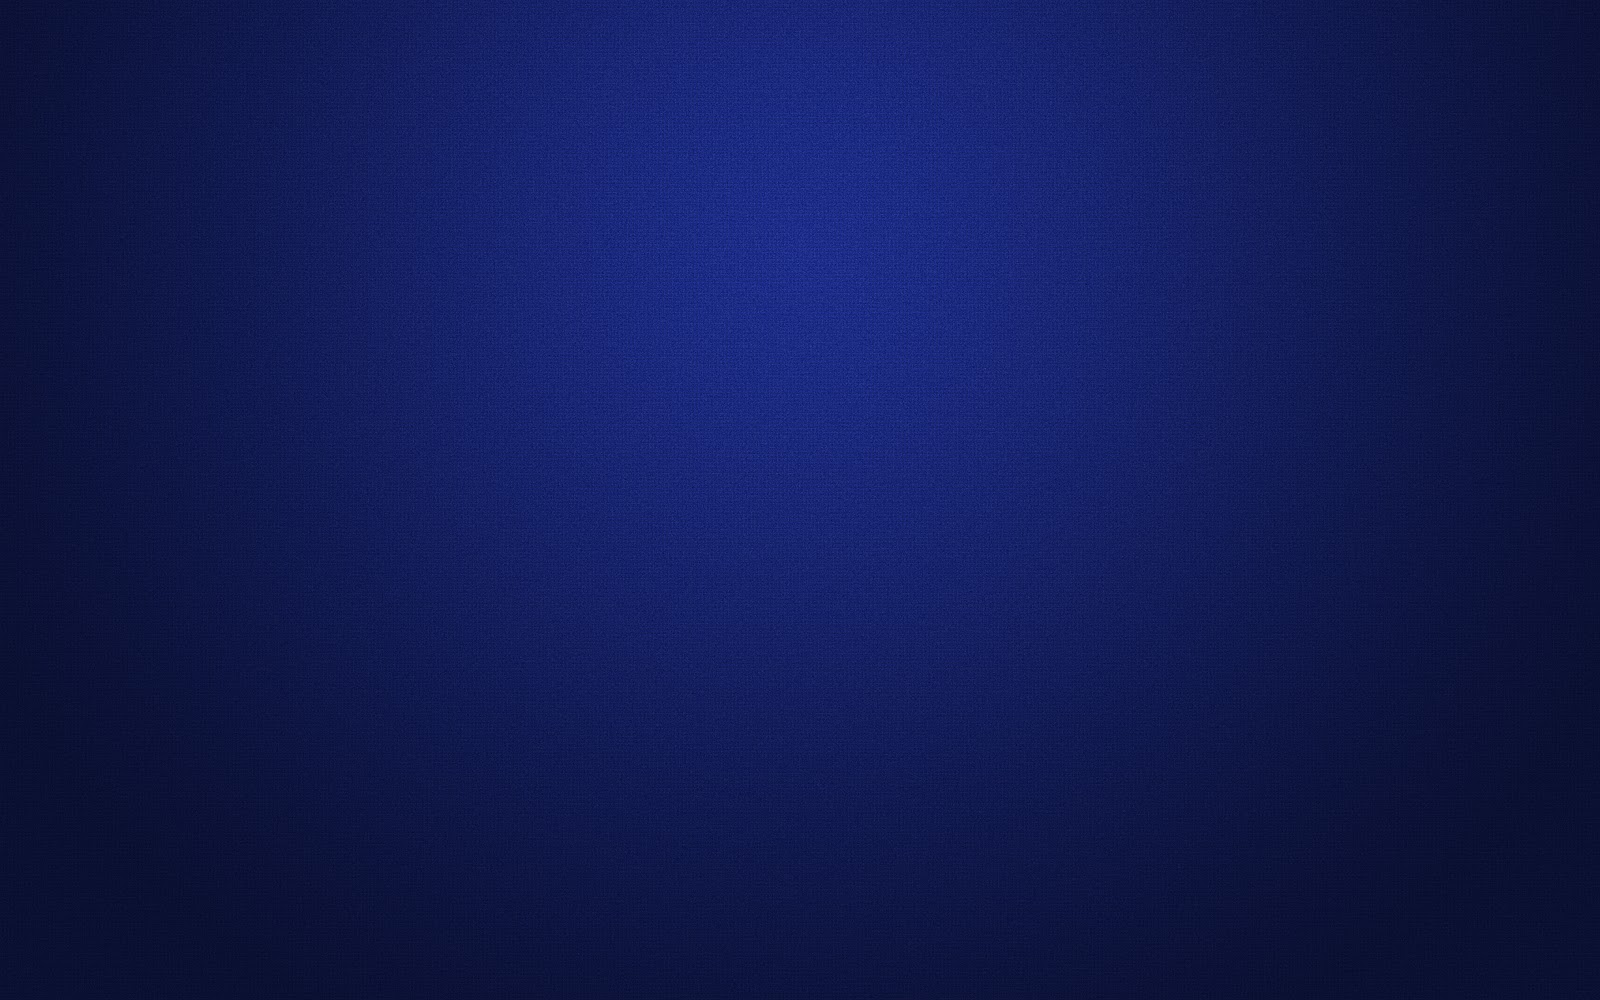 Abstract Dark Blue Background Design Template Stock Illustration 455178262   Shutterstock